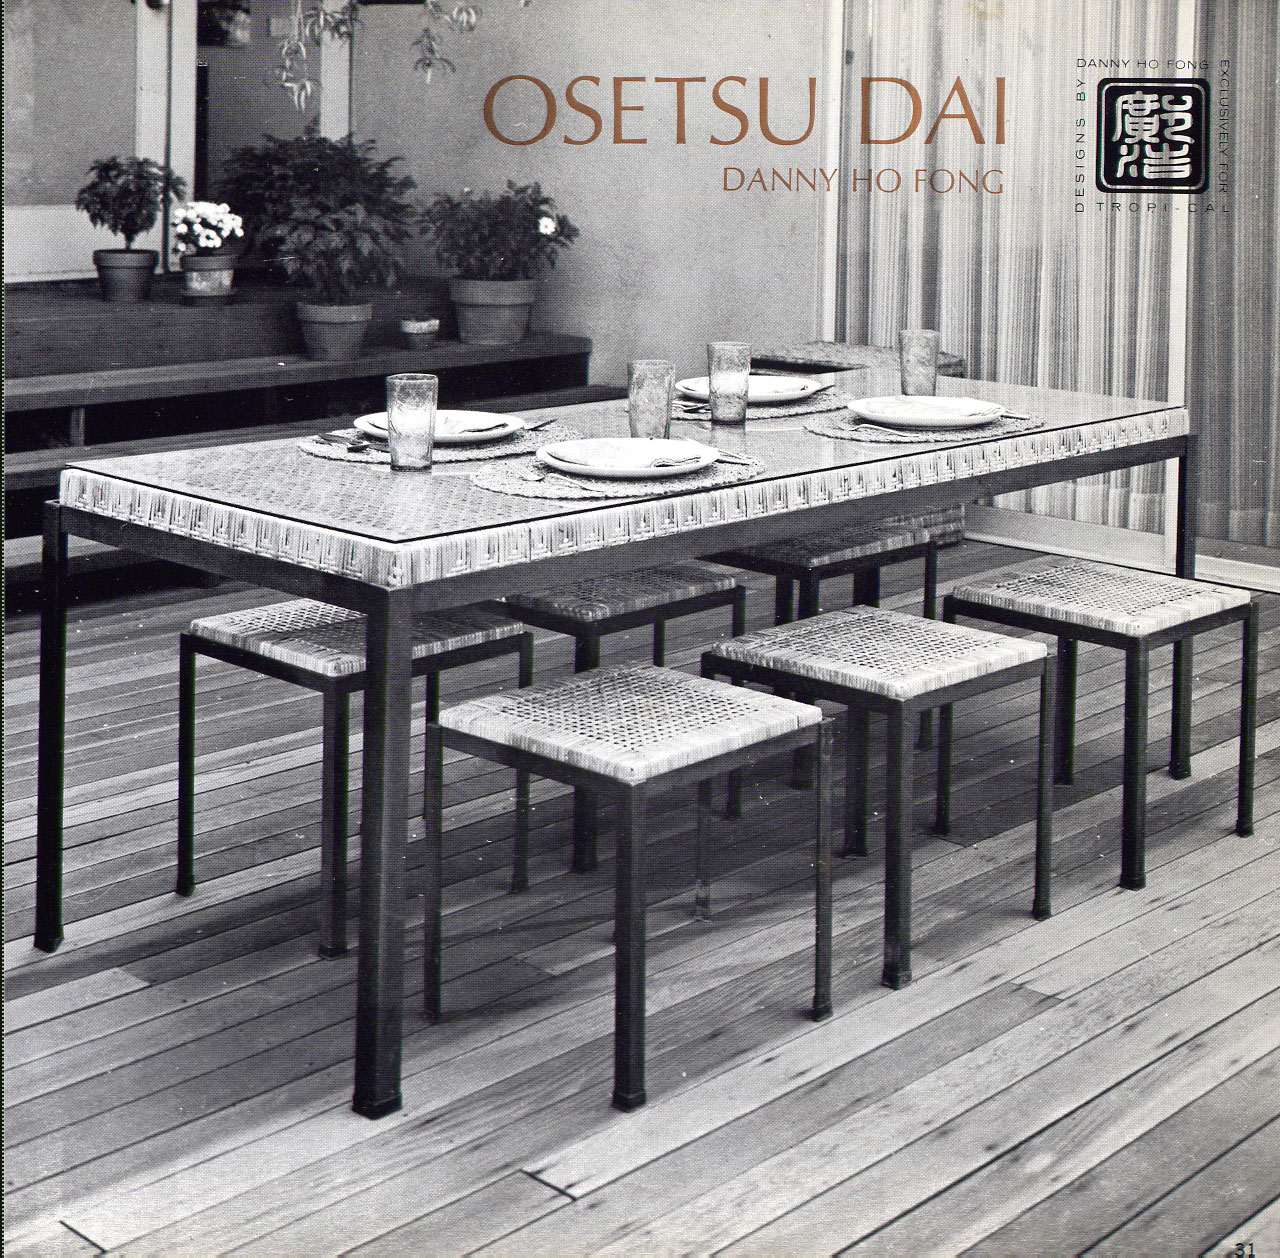 osetsu-dai-dining-group-fong-bros-throwback-1960s